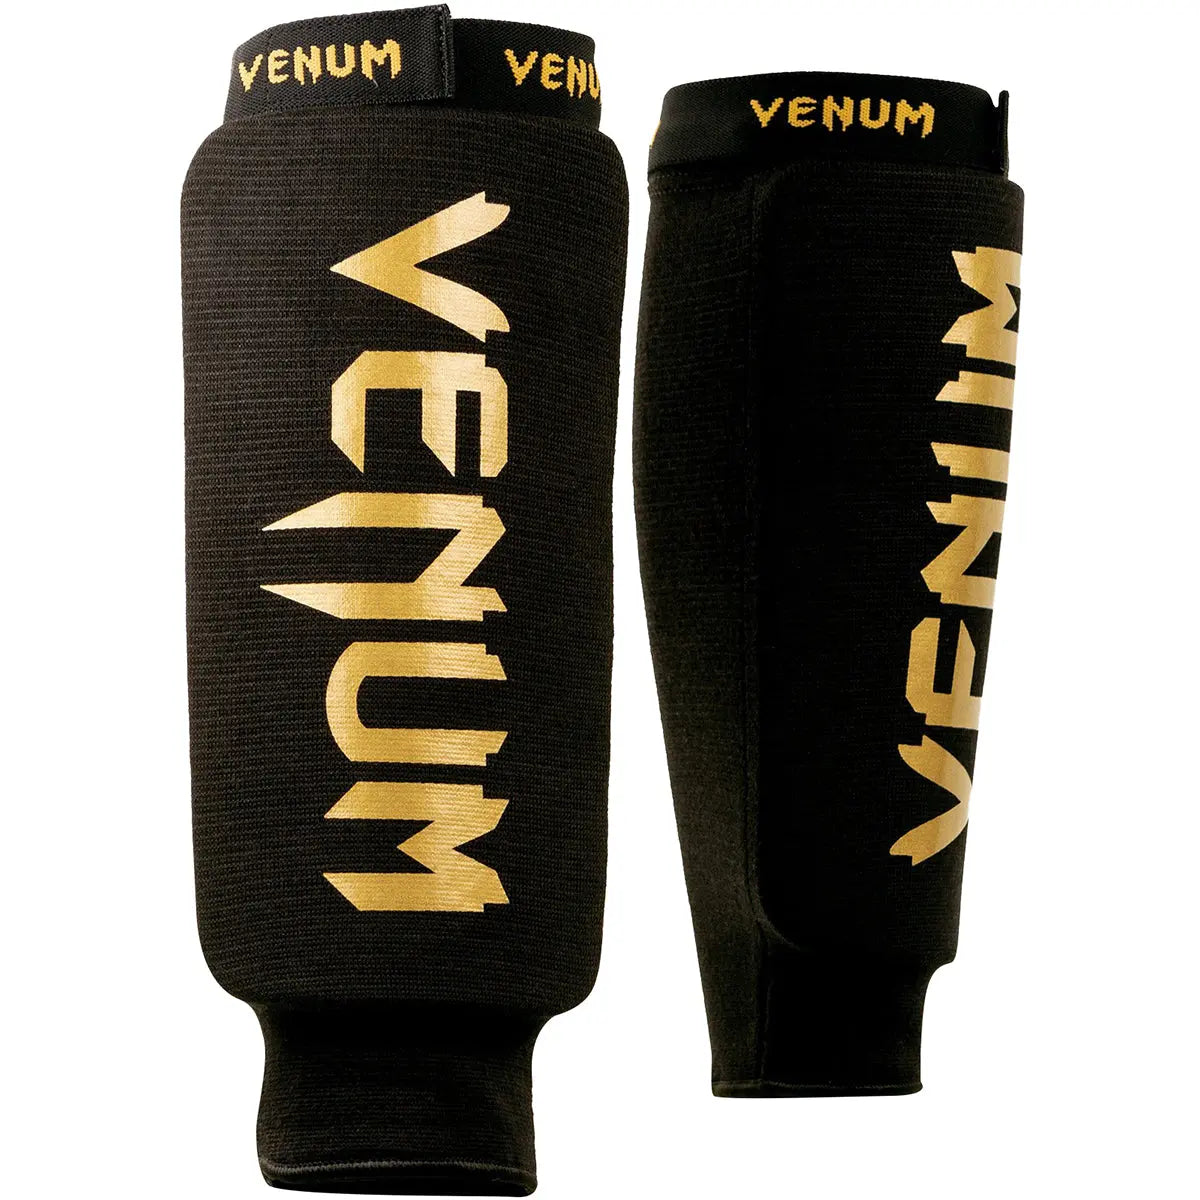 Venum Kontact Protective MMA Shin Guards - Black/Gold Venum